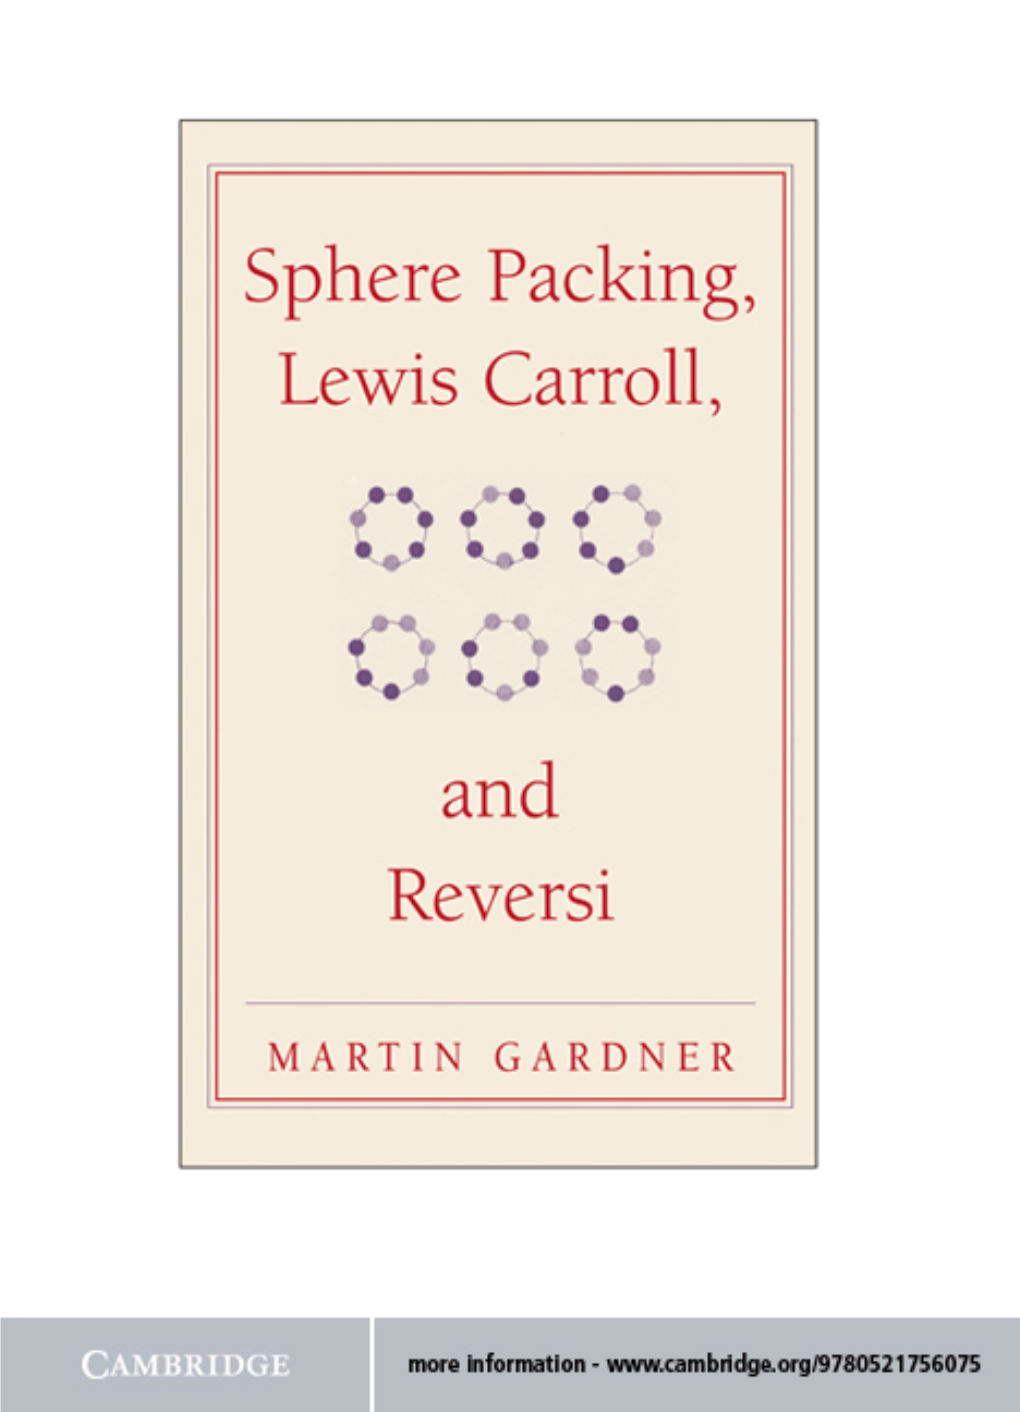 Martin Gardner's New Mathematical Diversions